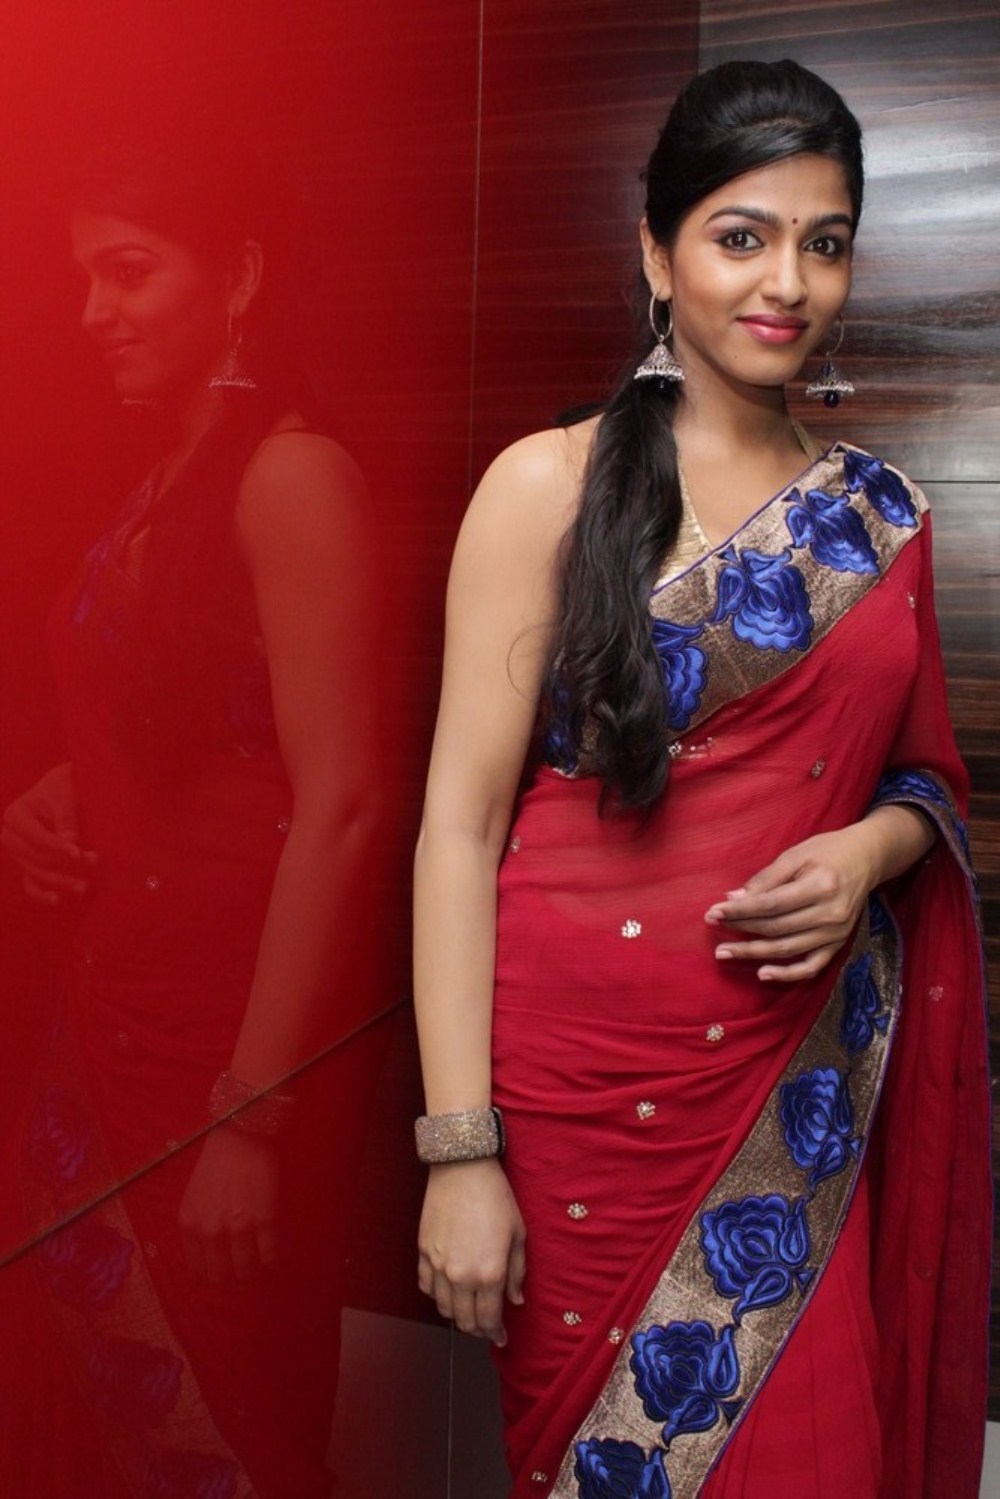 Gallery65 - World of Actress: Tamil Actress Vj 